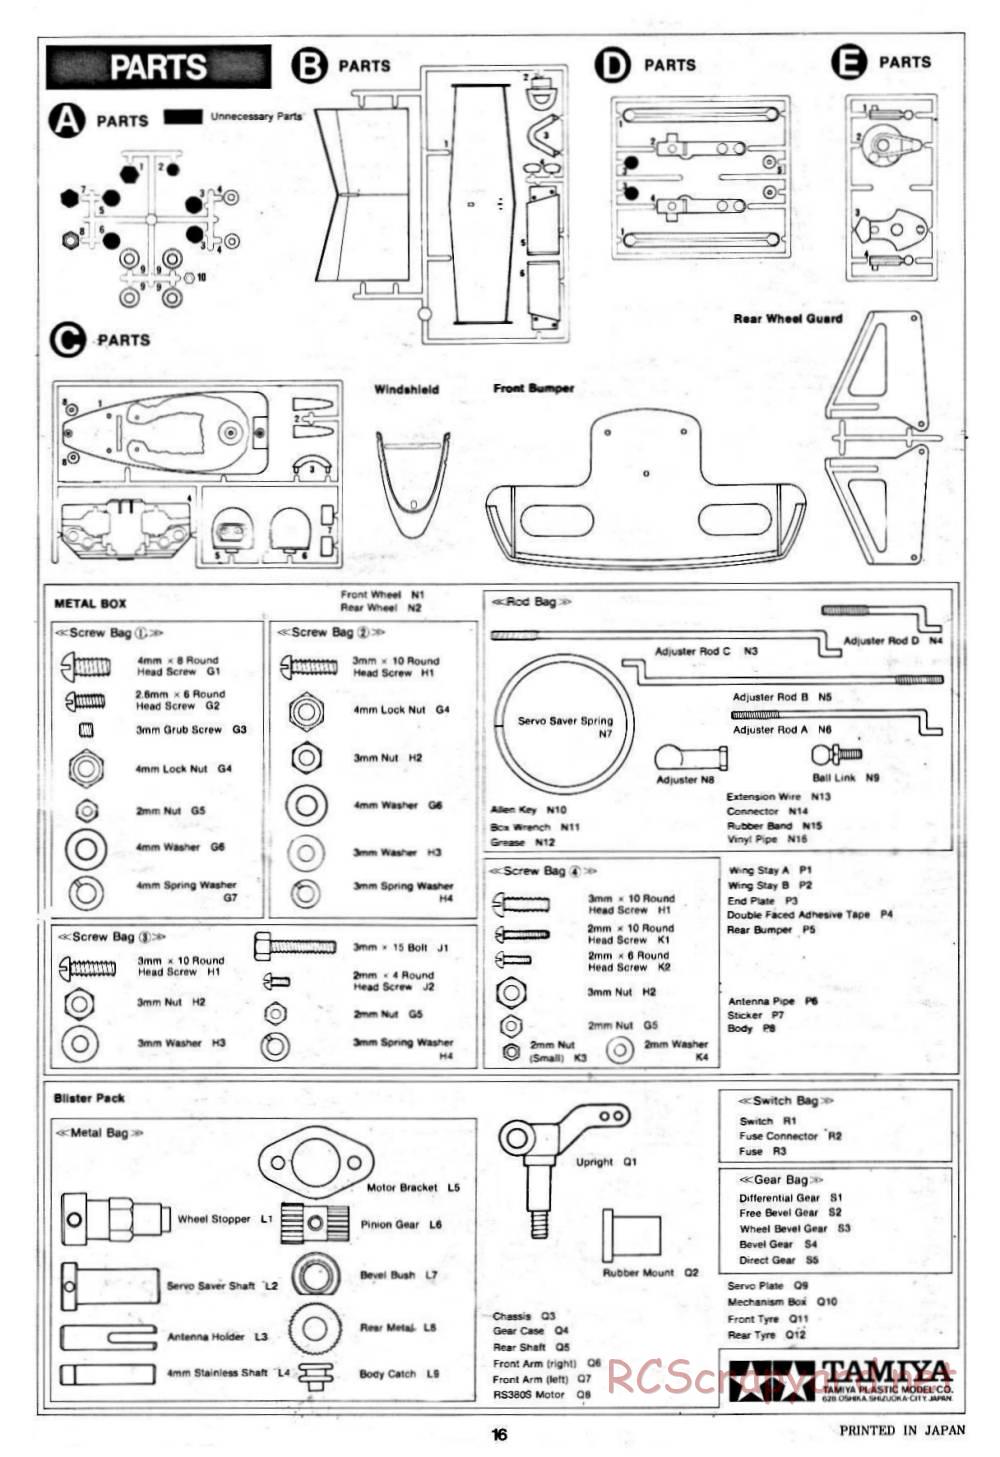 Tamiya - Ferrari 312T3 - 58011 - Manual - Page 16